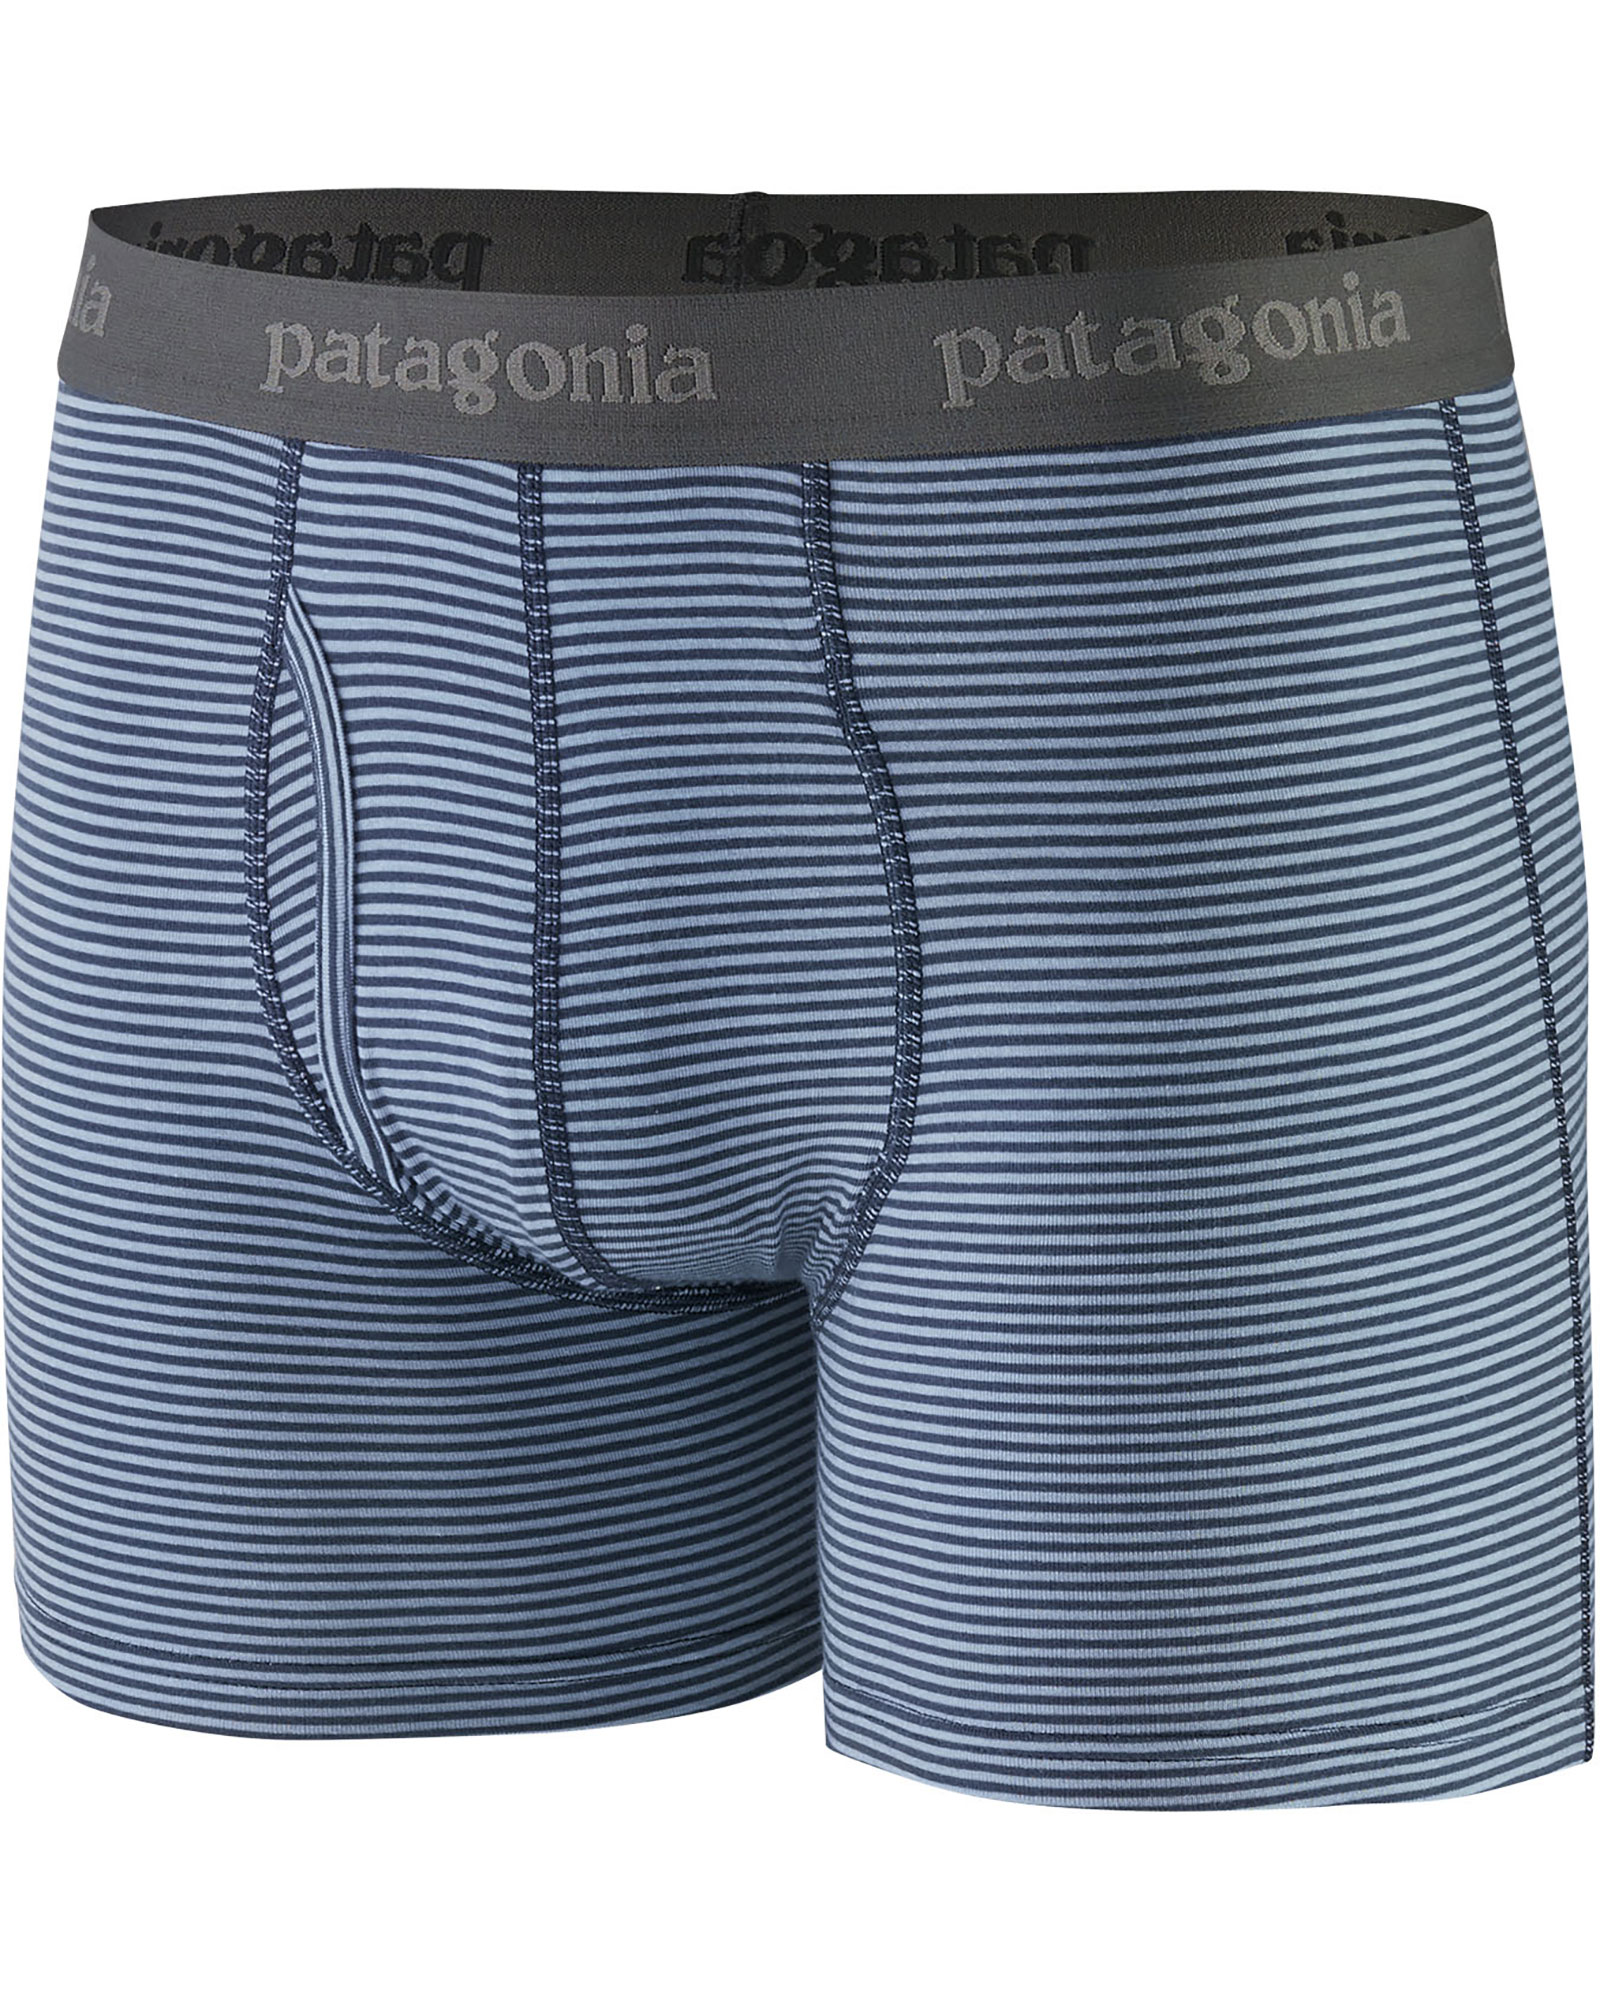 Patagonia Men’s Essential 3" Boxers - Fathom Stripe/ New Navy XL